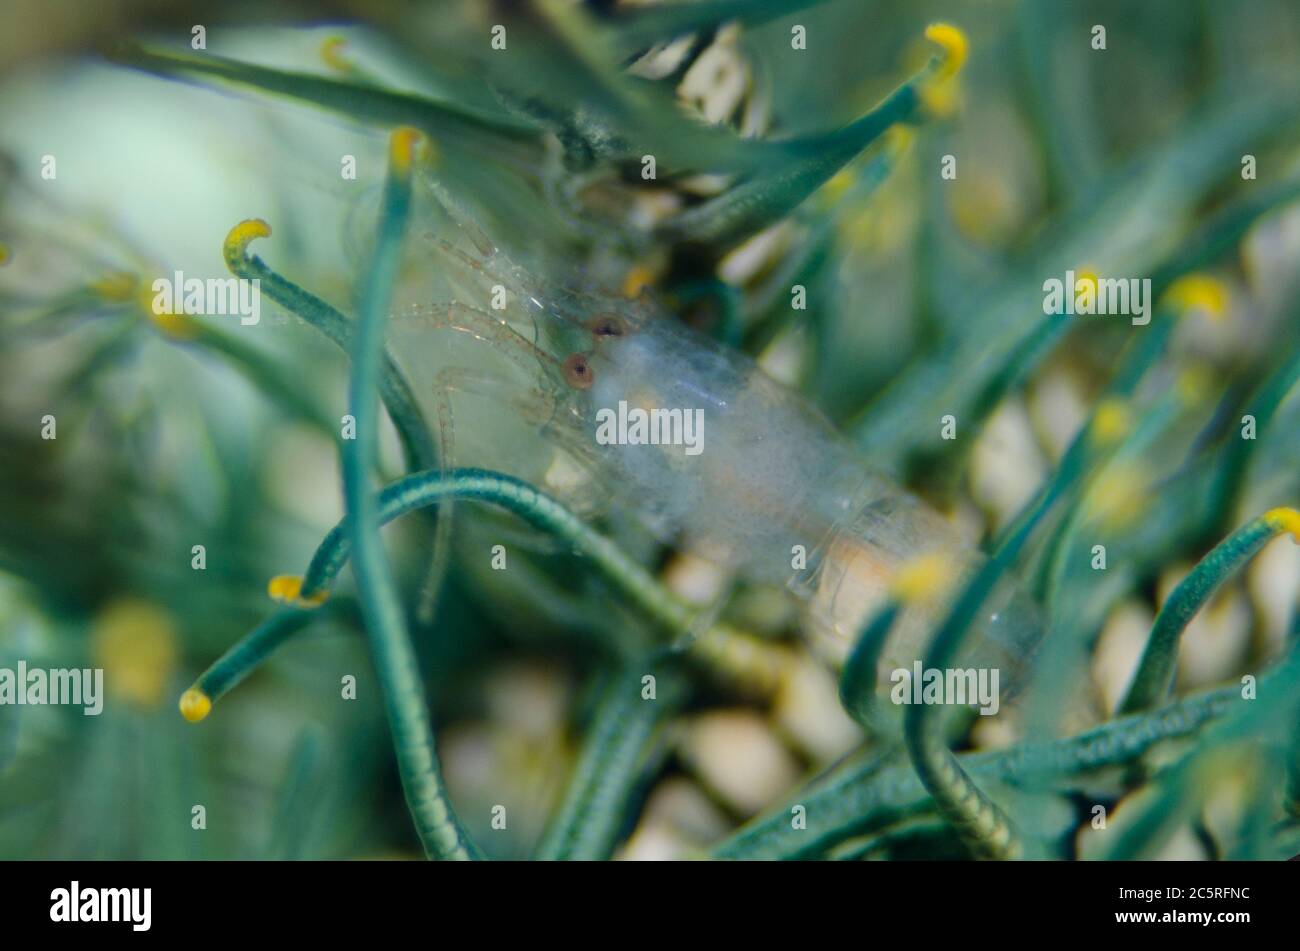 Recently moulted Striped Snapping Shrimp, Synalpheus striatus, on Crinoid, Comatulida Order, Pohon Miring dive site, Banda Besar Island, Banda Islands Stock Photo